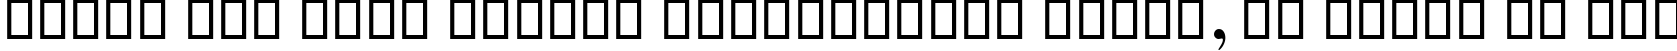 Пример написания шрифтом B Compset Bold текста на русском